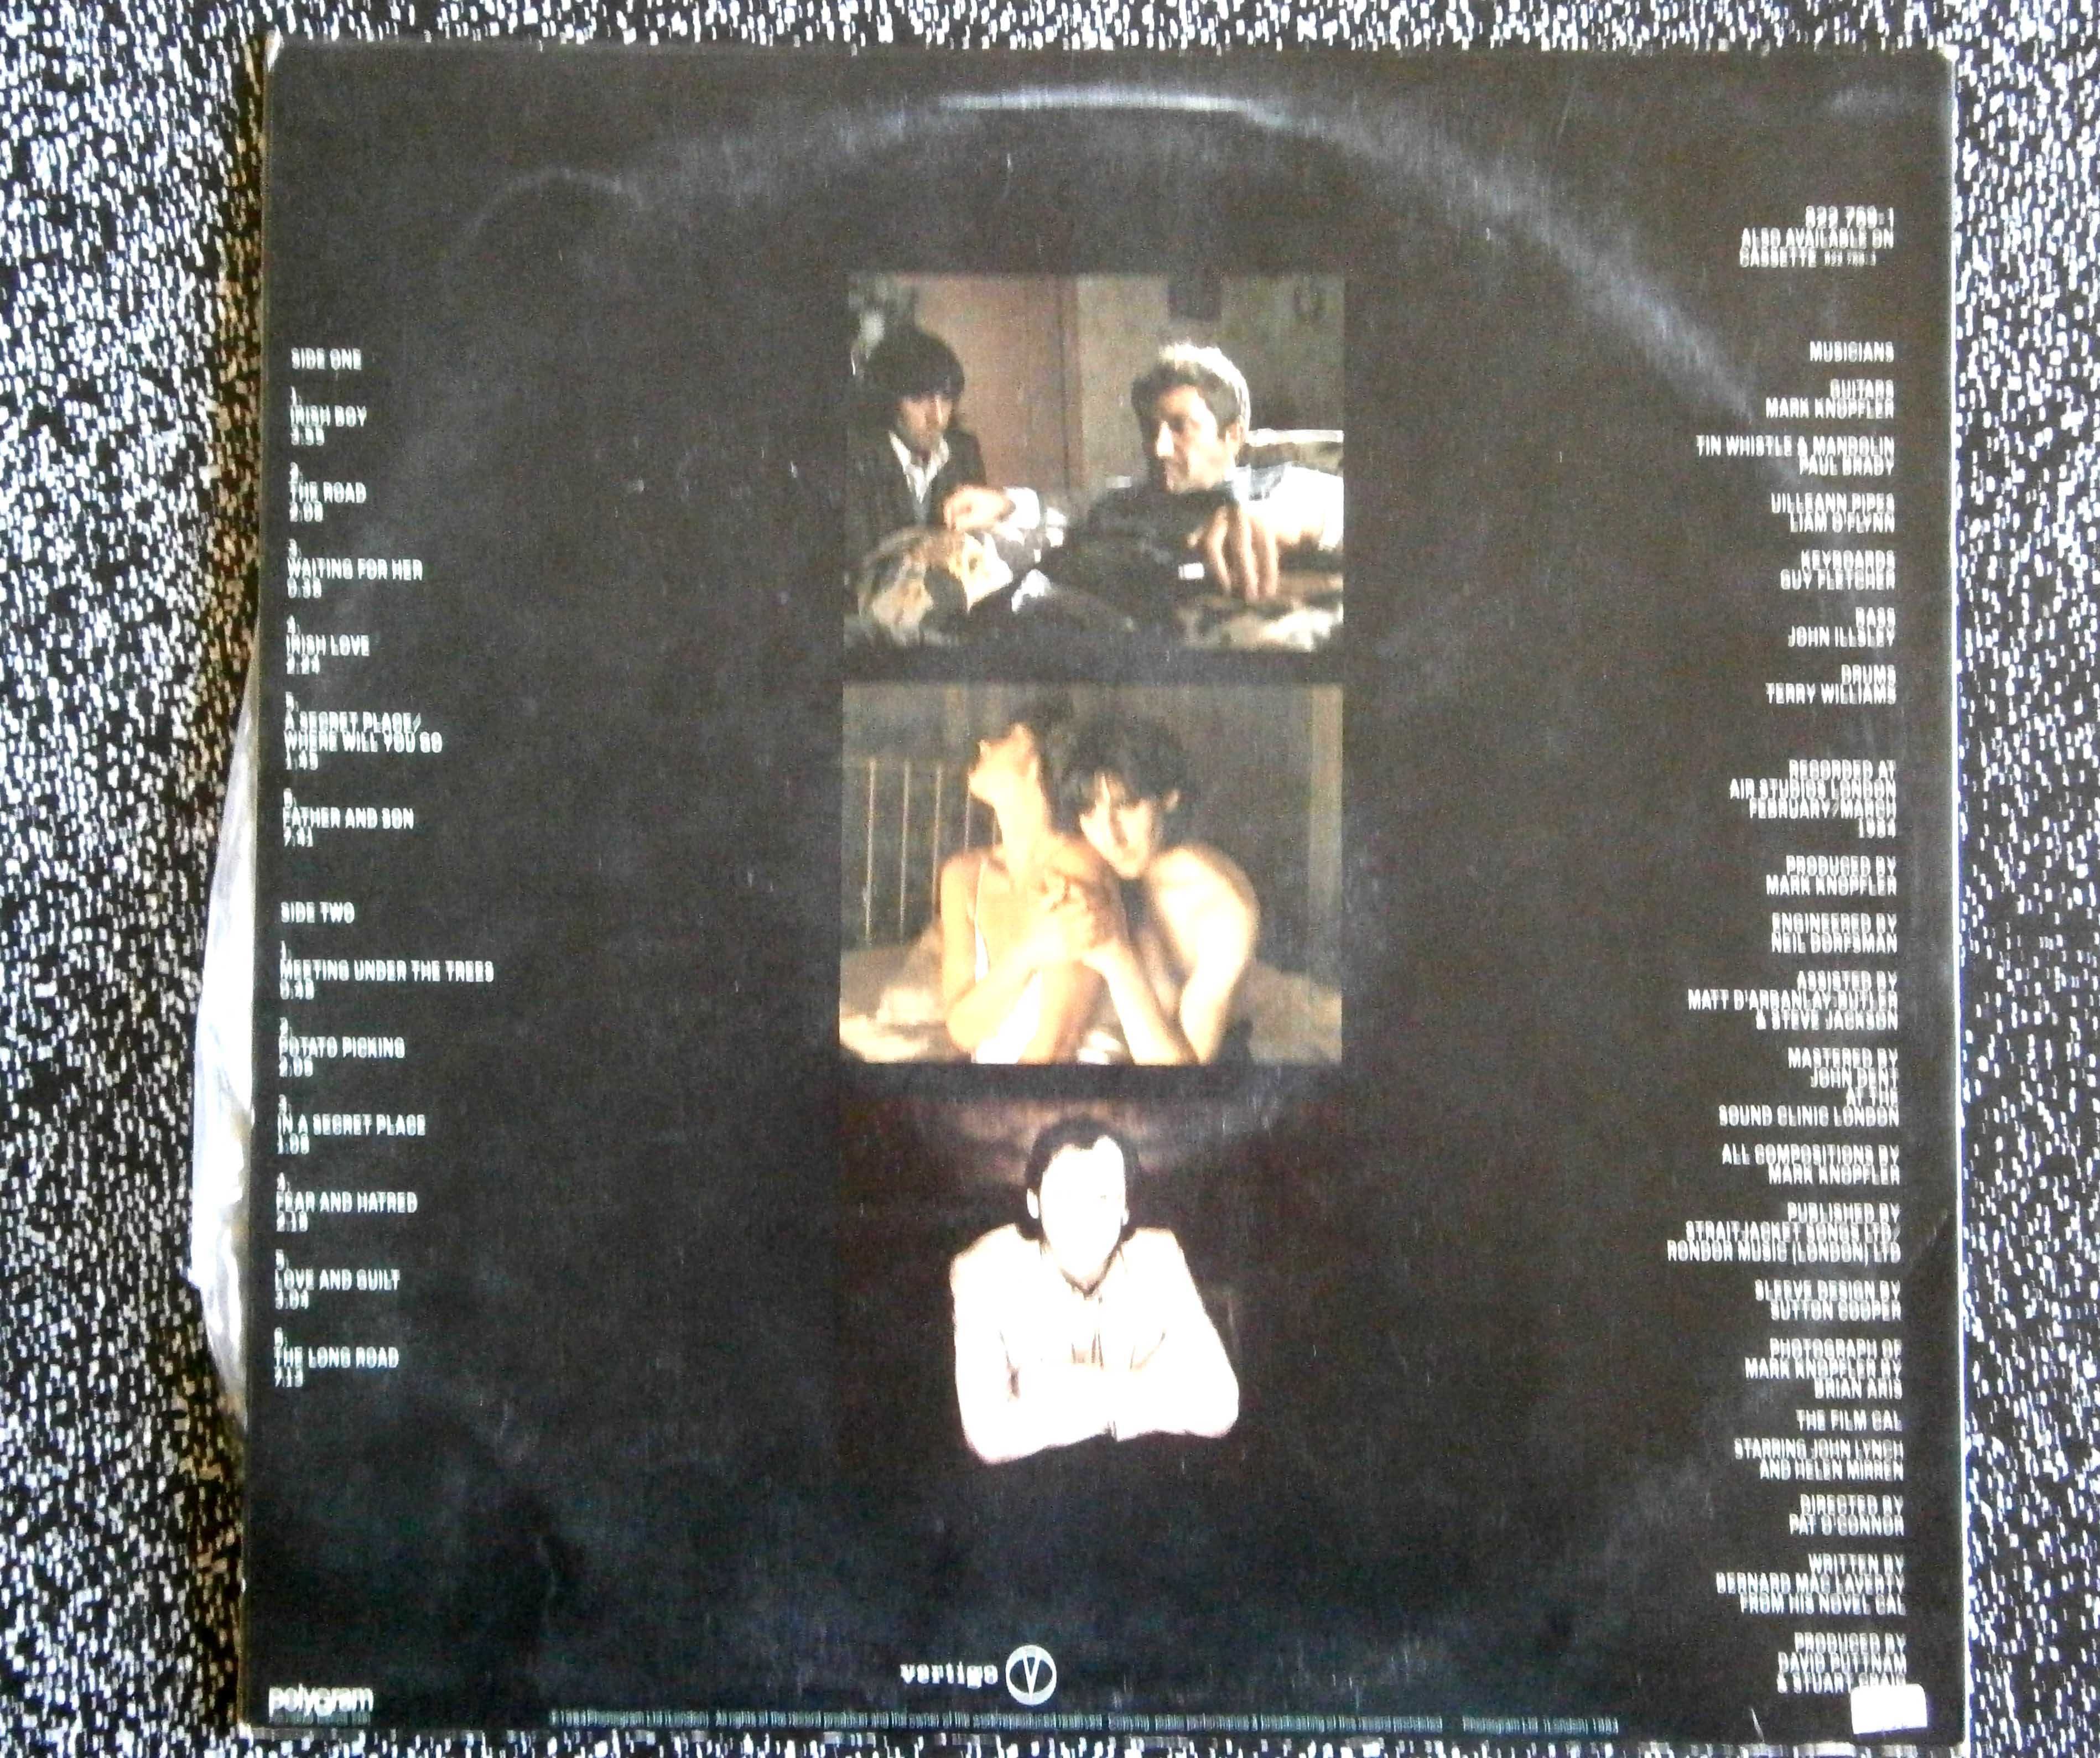 Mark Knopfler Cal Banda Sonora Vinil LP 1984